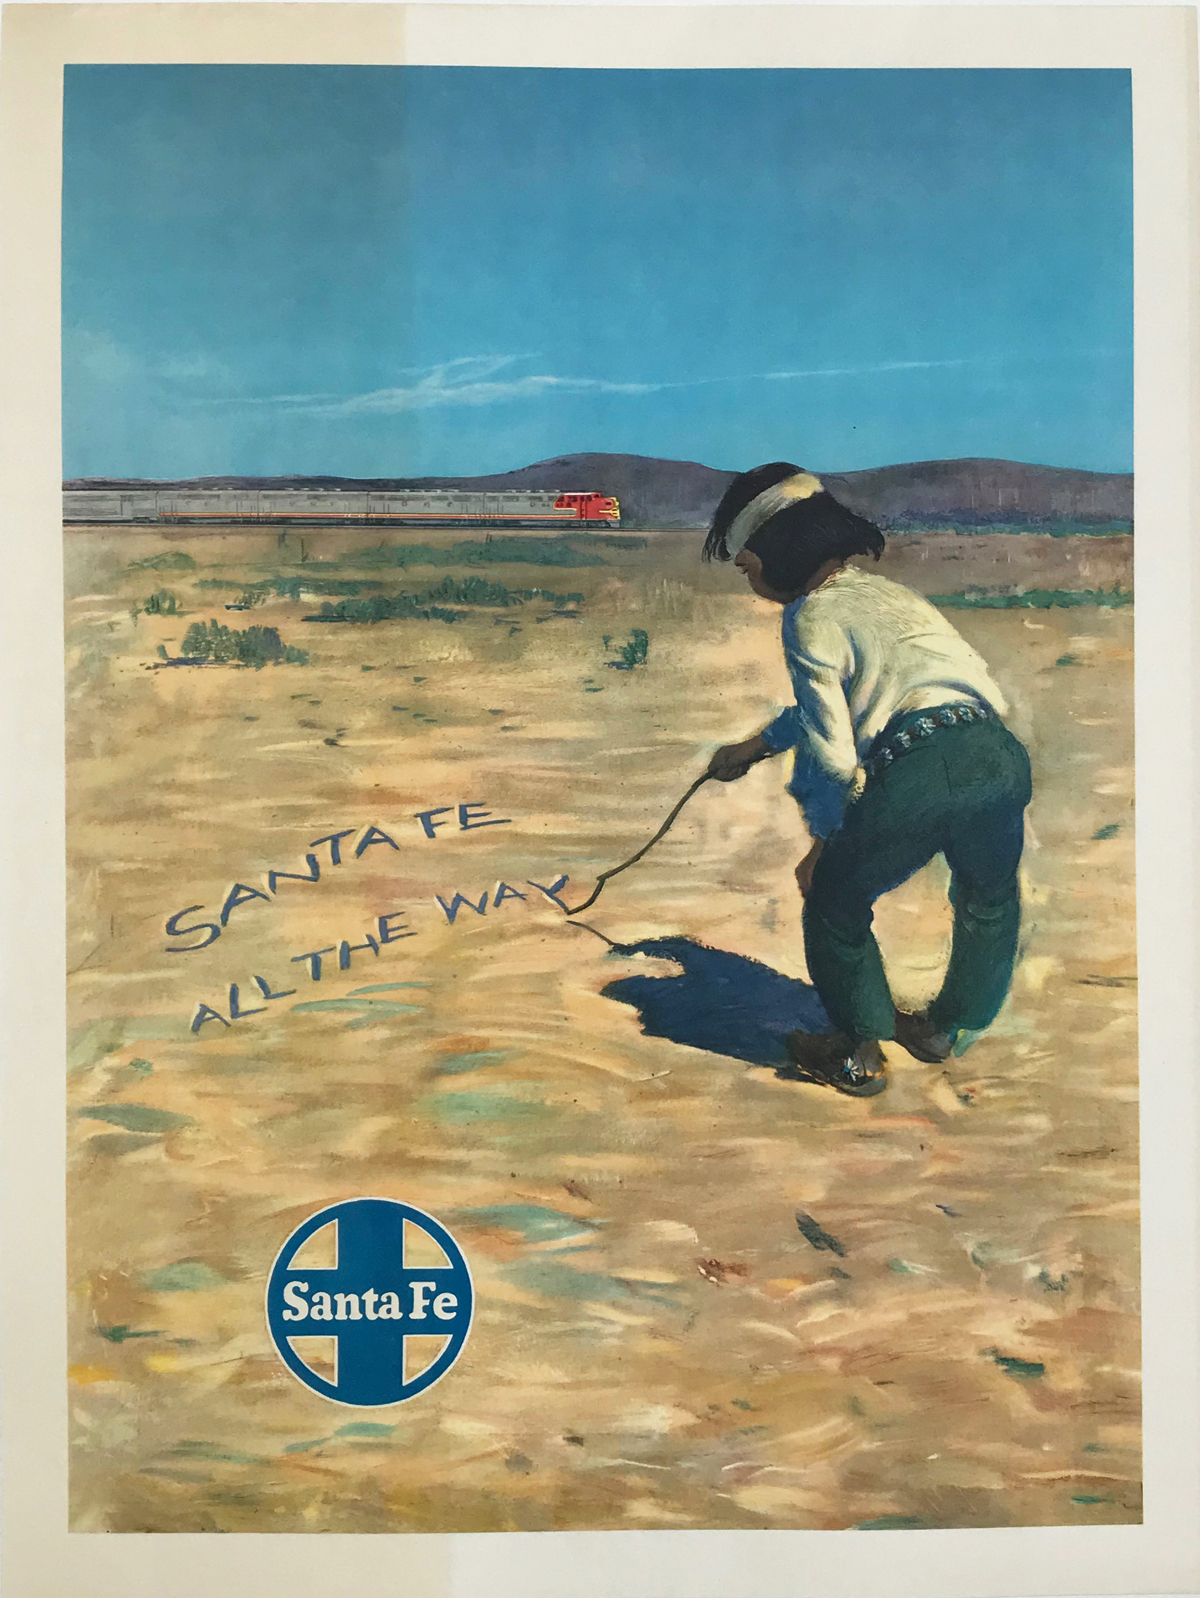 Santa Fe Railway All The Way Original 1949 Vintage American Passenger Railroad Train Travel Advertisement Poster Linen Backed